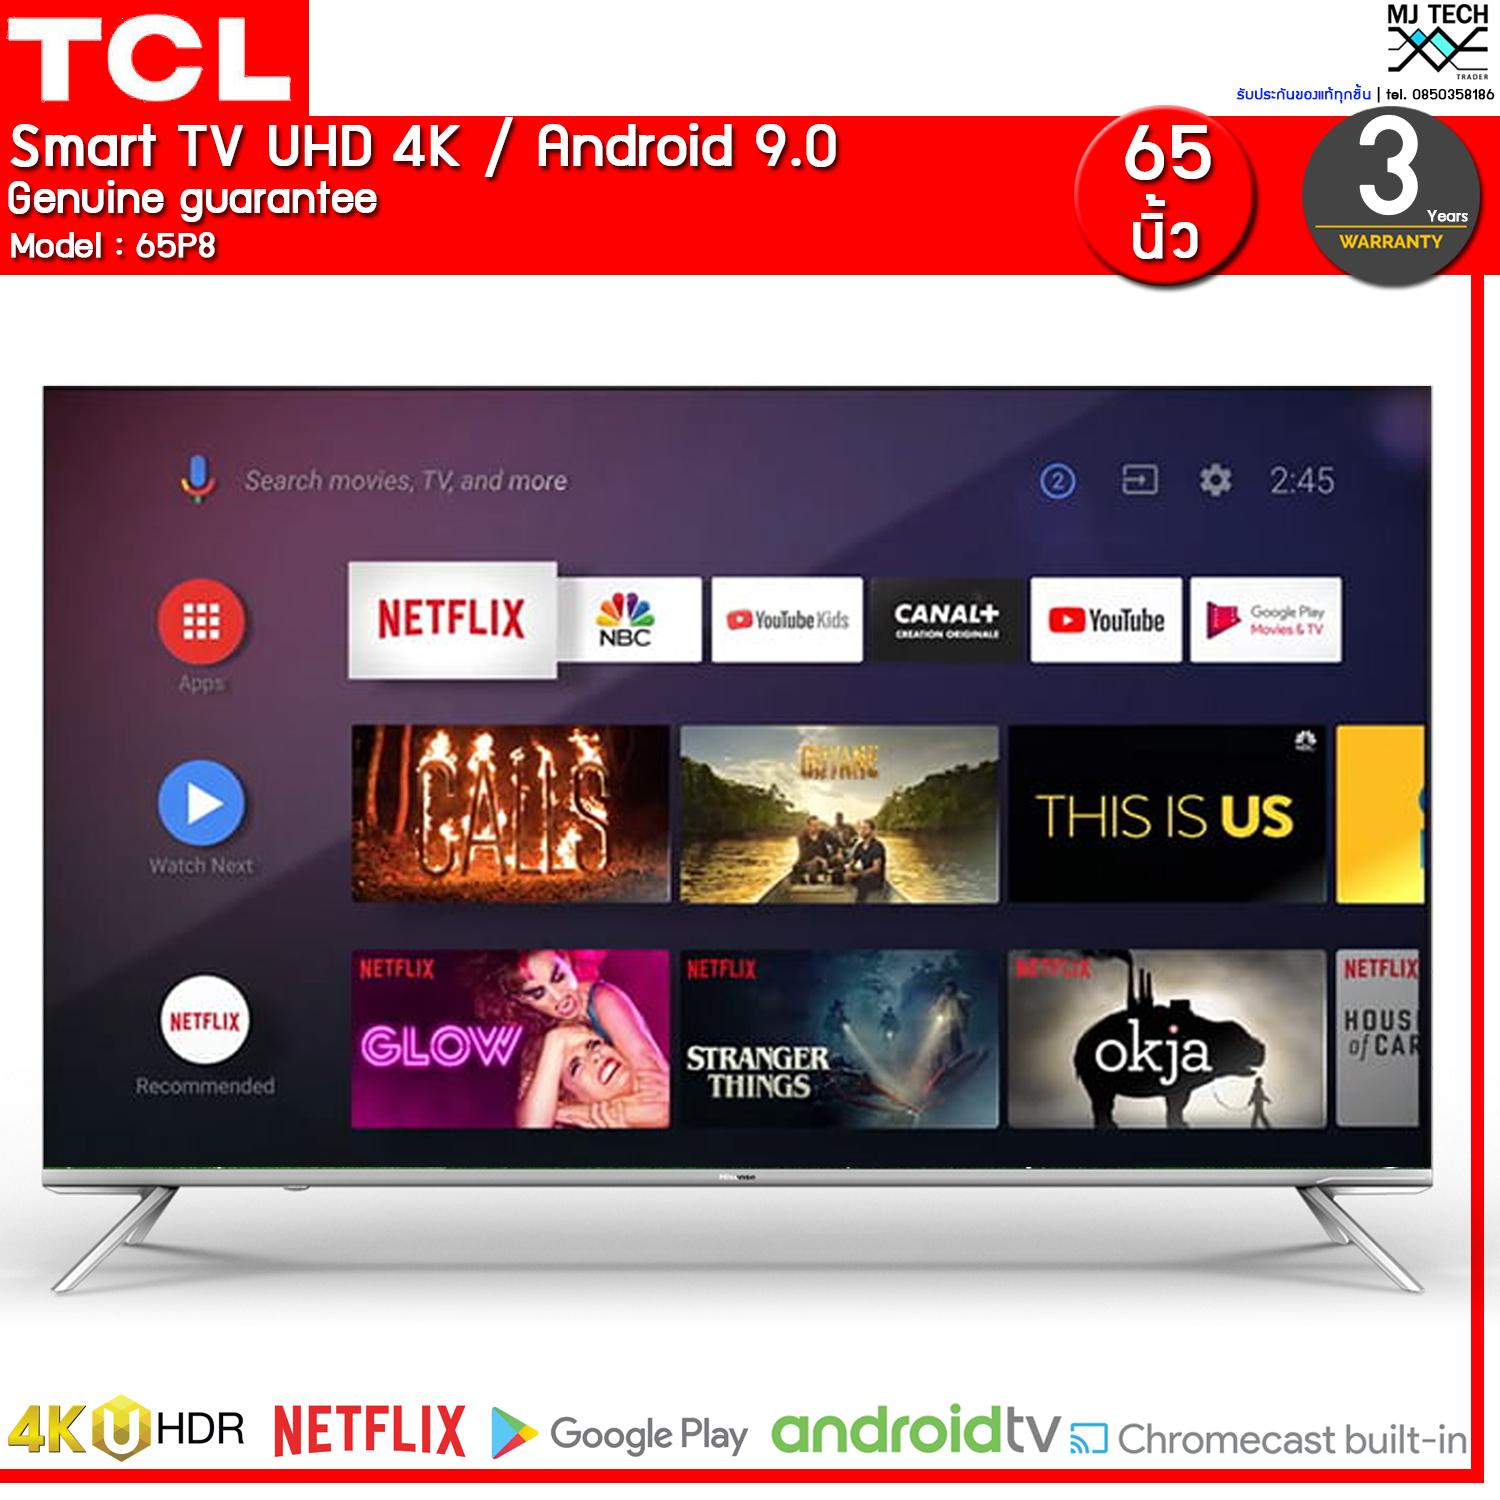 TCL Smart TV UHD 4K Android Version 9.0 ขนาด 65 นิ้ว รุ่น 65P8 (ส่งฟรีทั่วไทย)